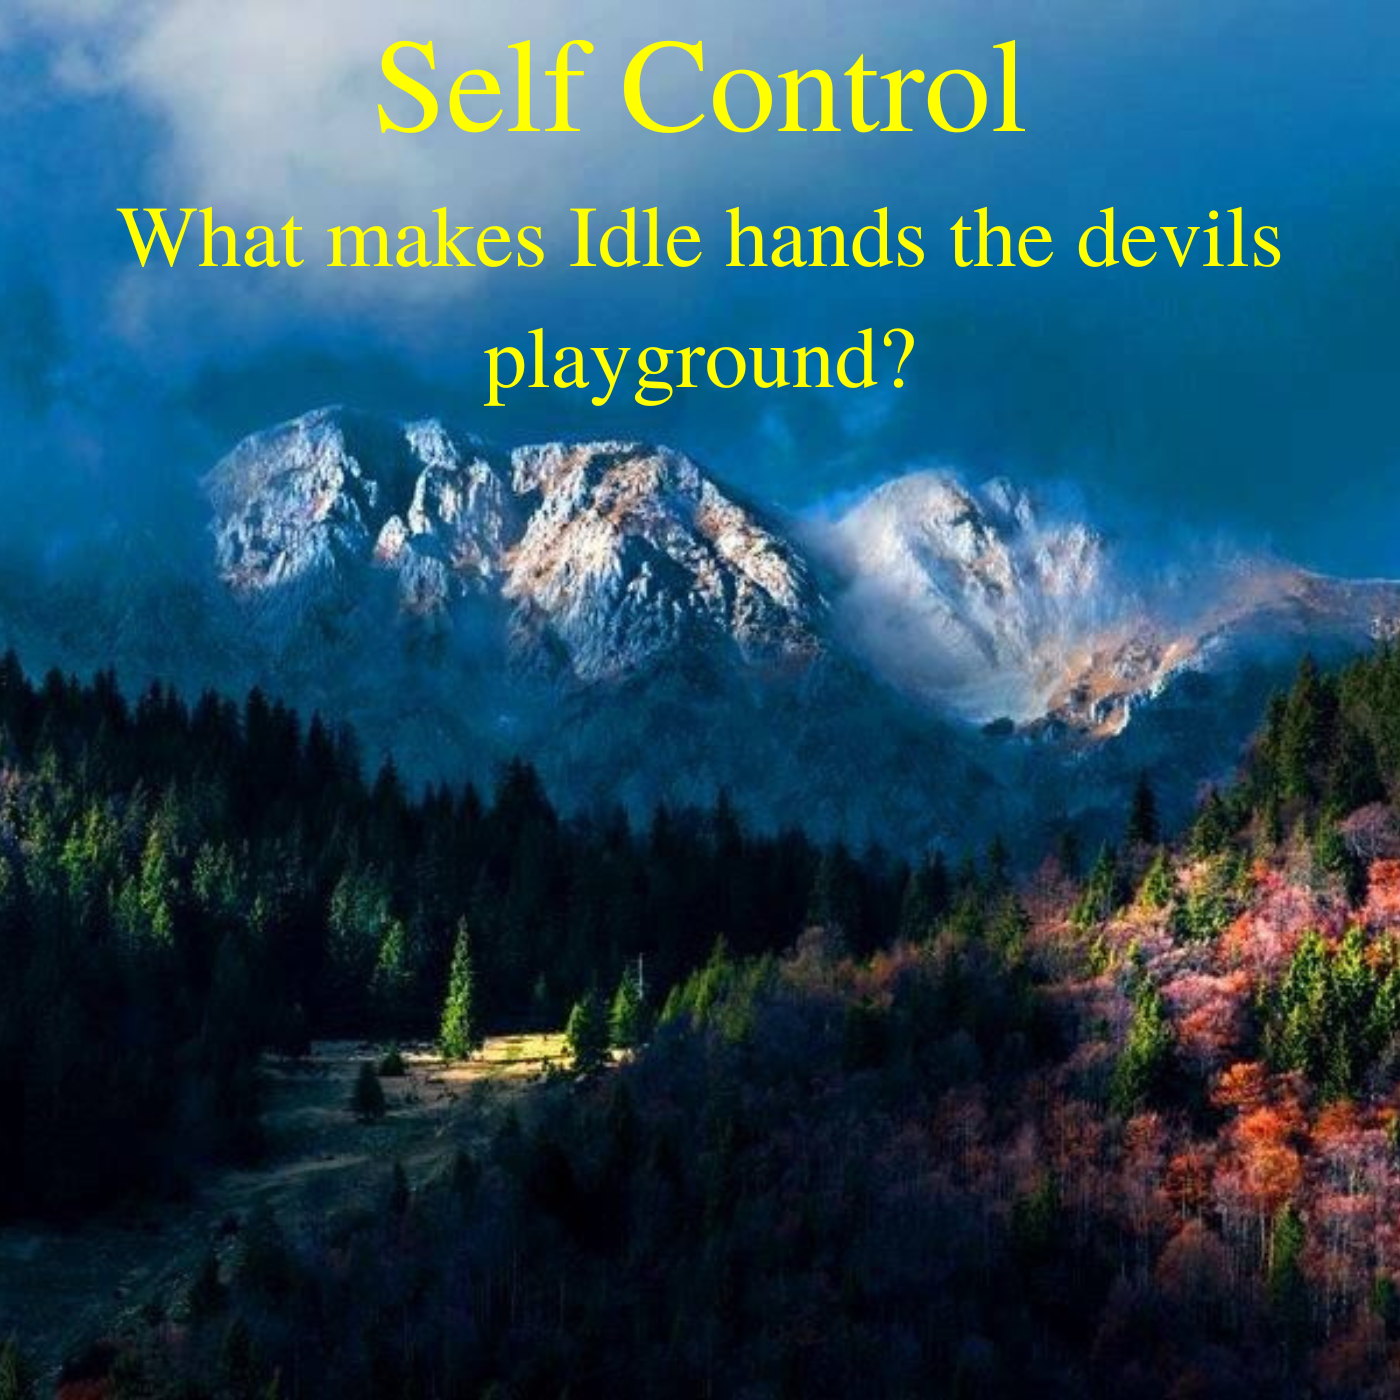 * Self Control